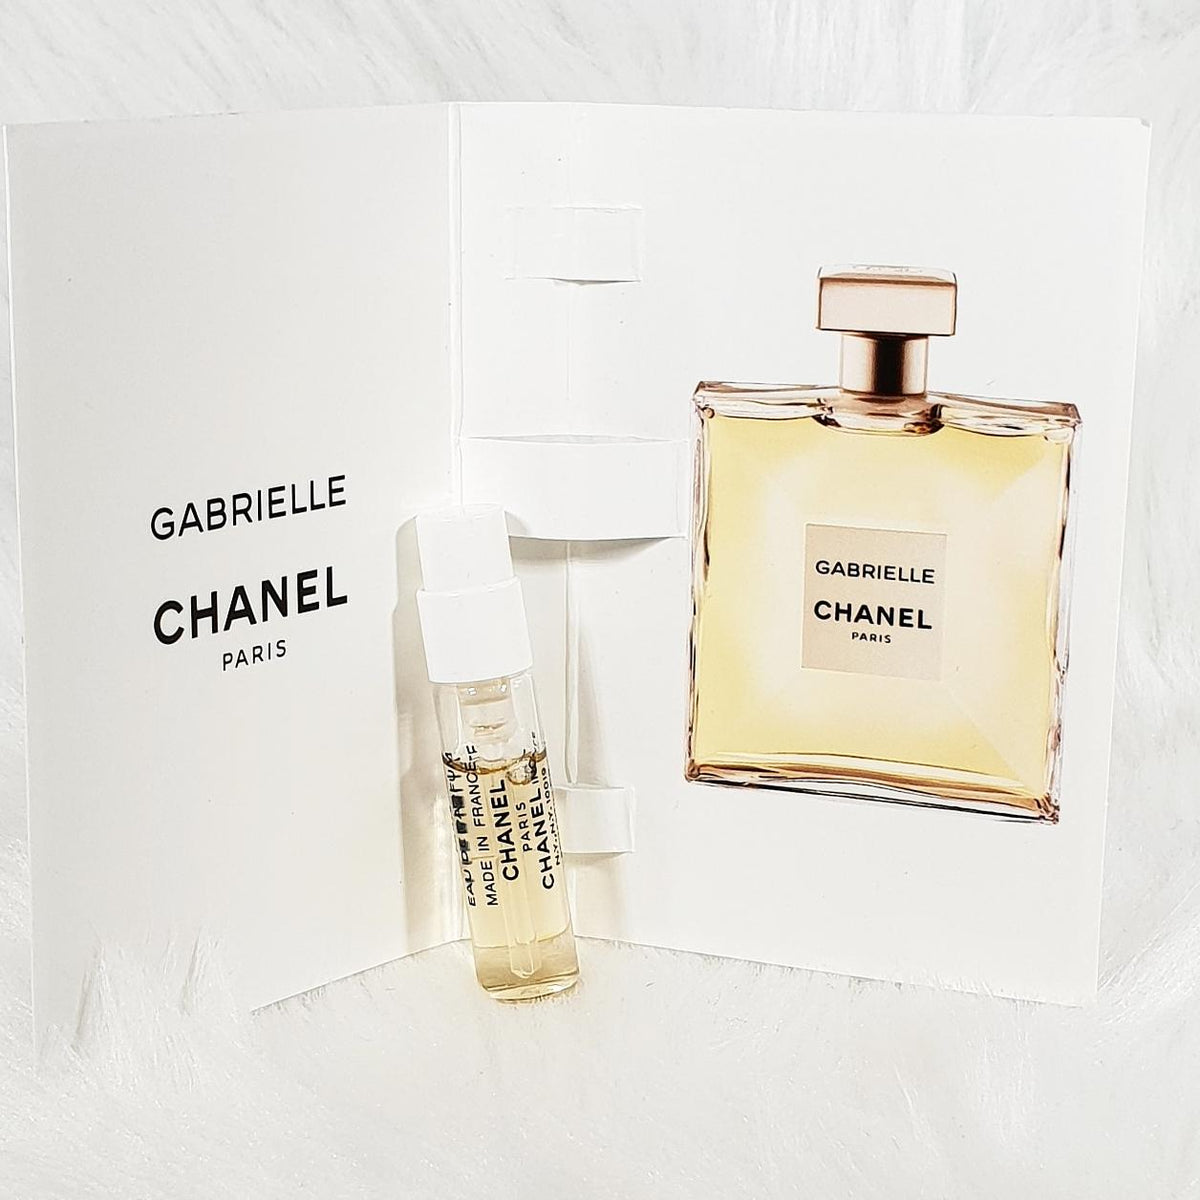 NEW CHANEL GABRIELLE Essence Fragrance Spray Vial Sample $8.99 - PicClick